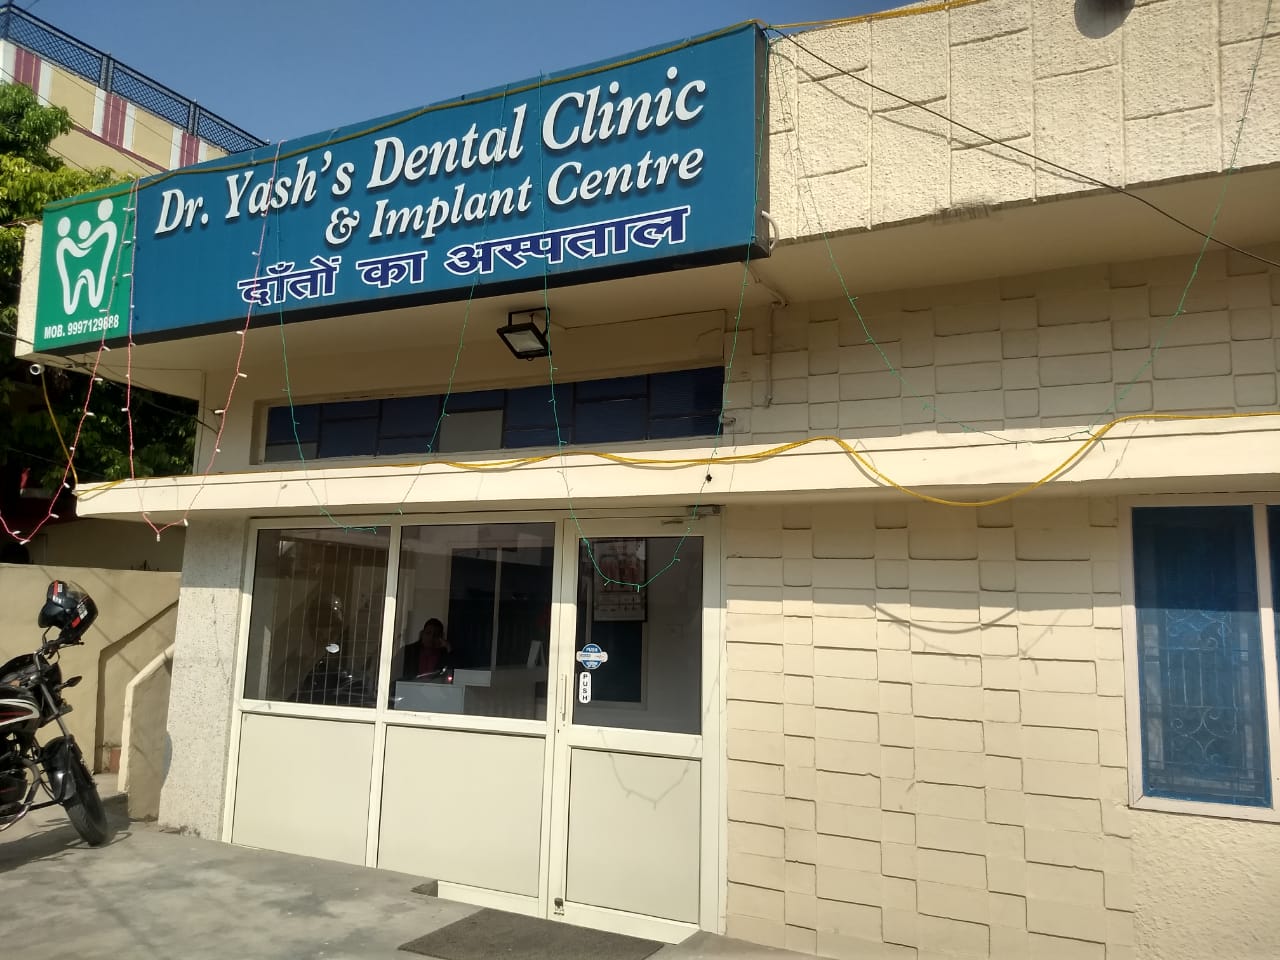 Dr. Yash's Dental Clinic & Implant Centre